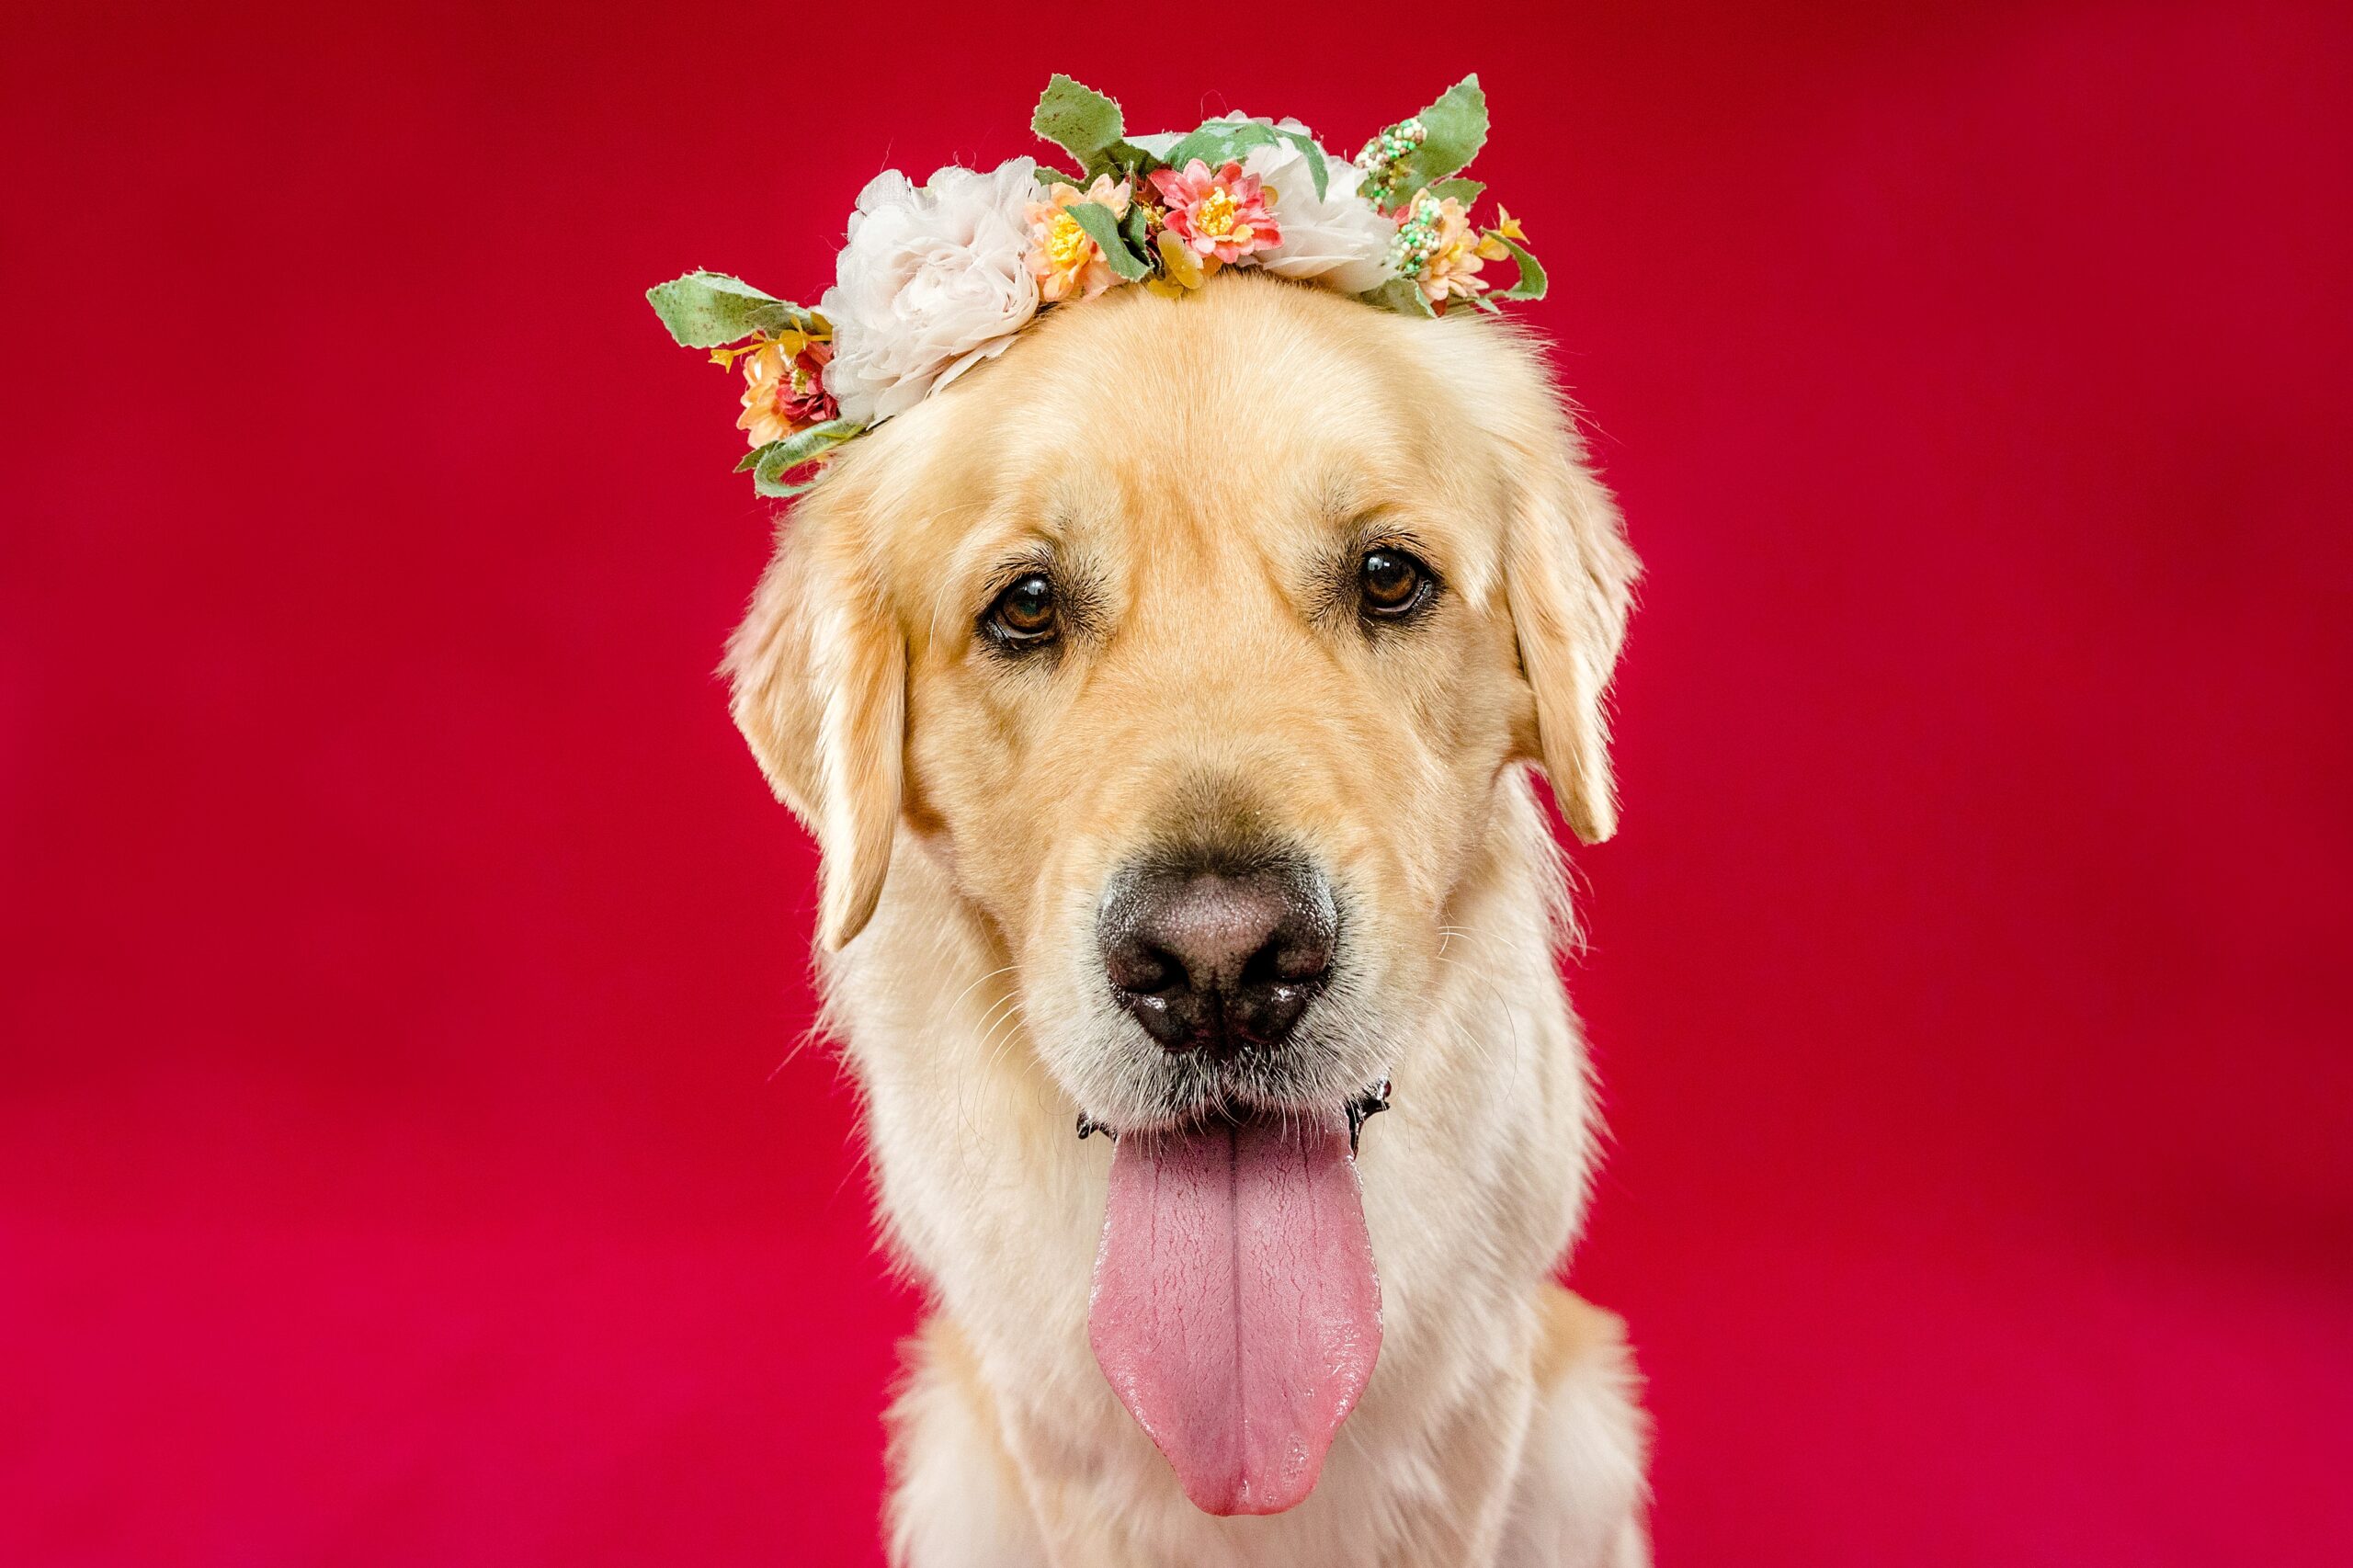 Forest & River Golden Retriever Service Dogs - The Beloved Pup Photo Studio Birmingham, Alabama Dog Photographer